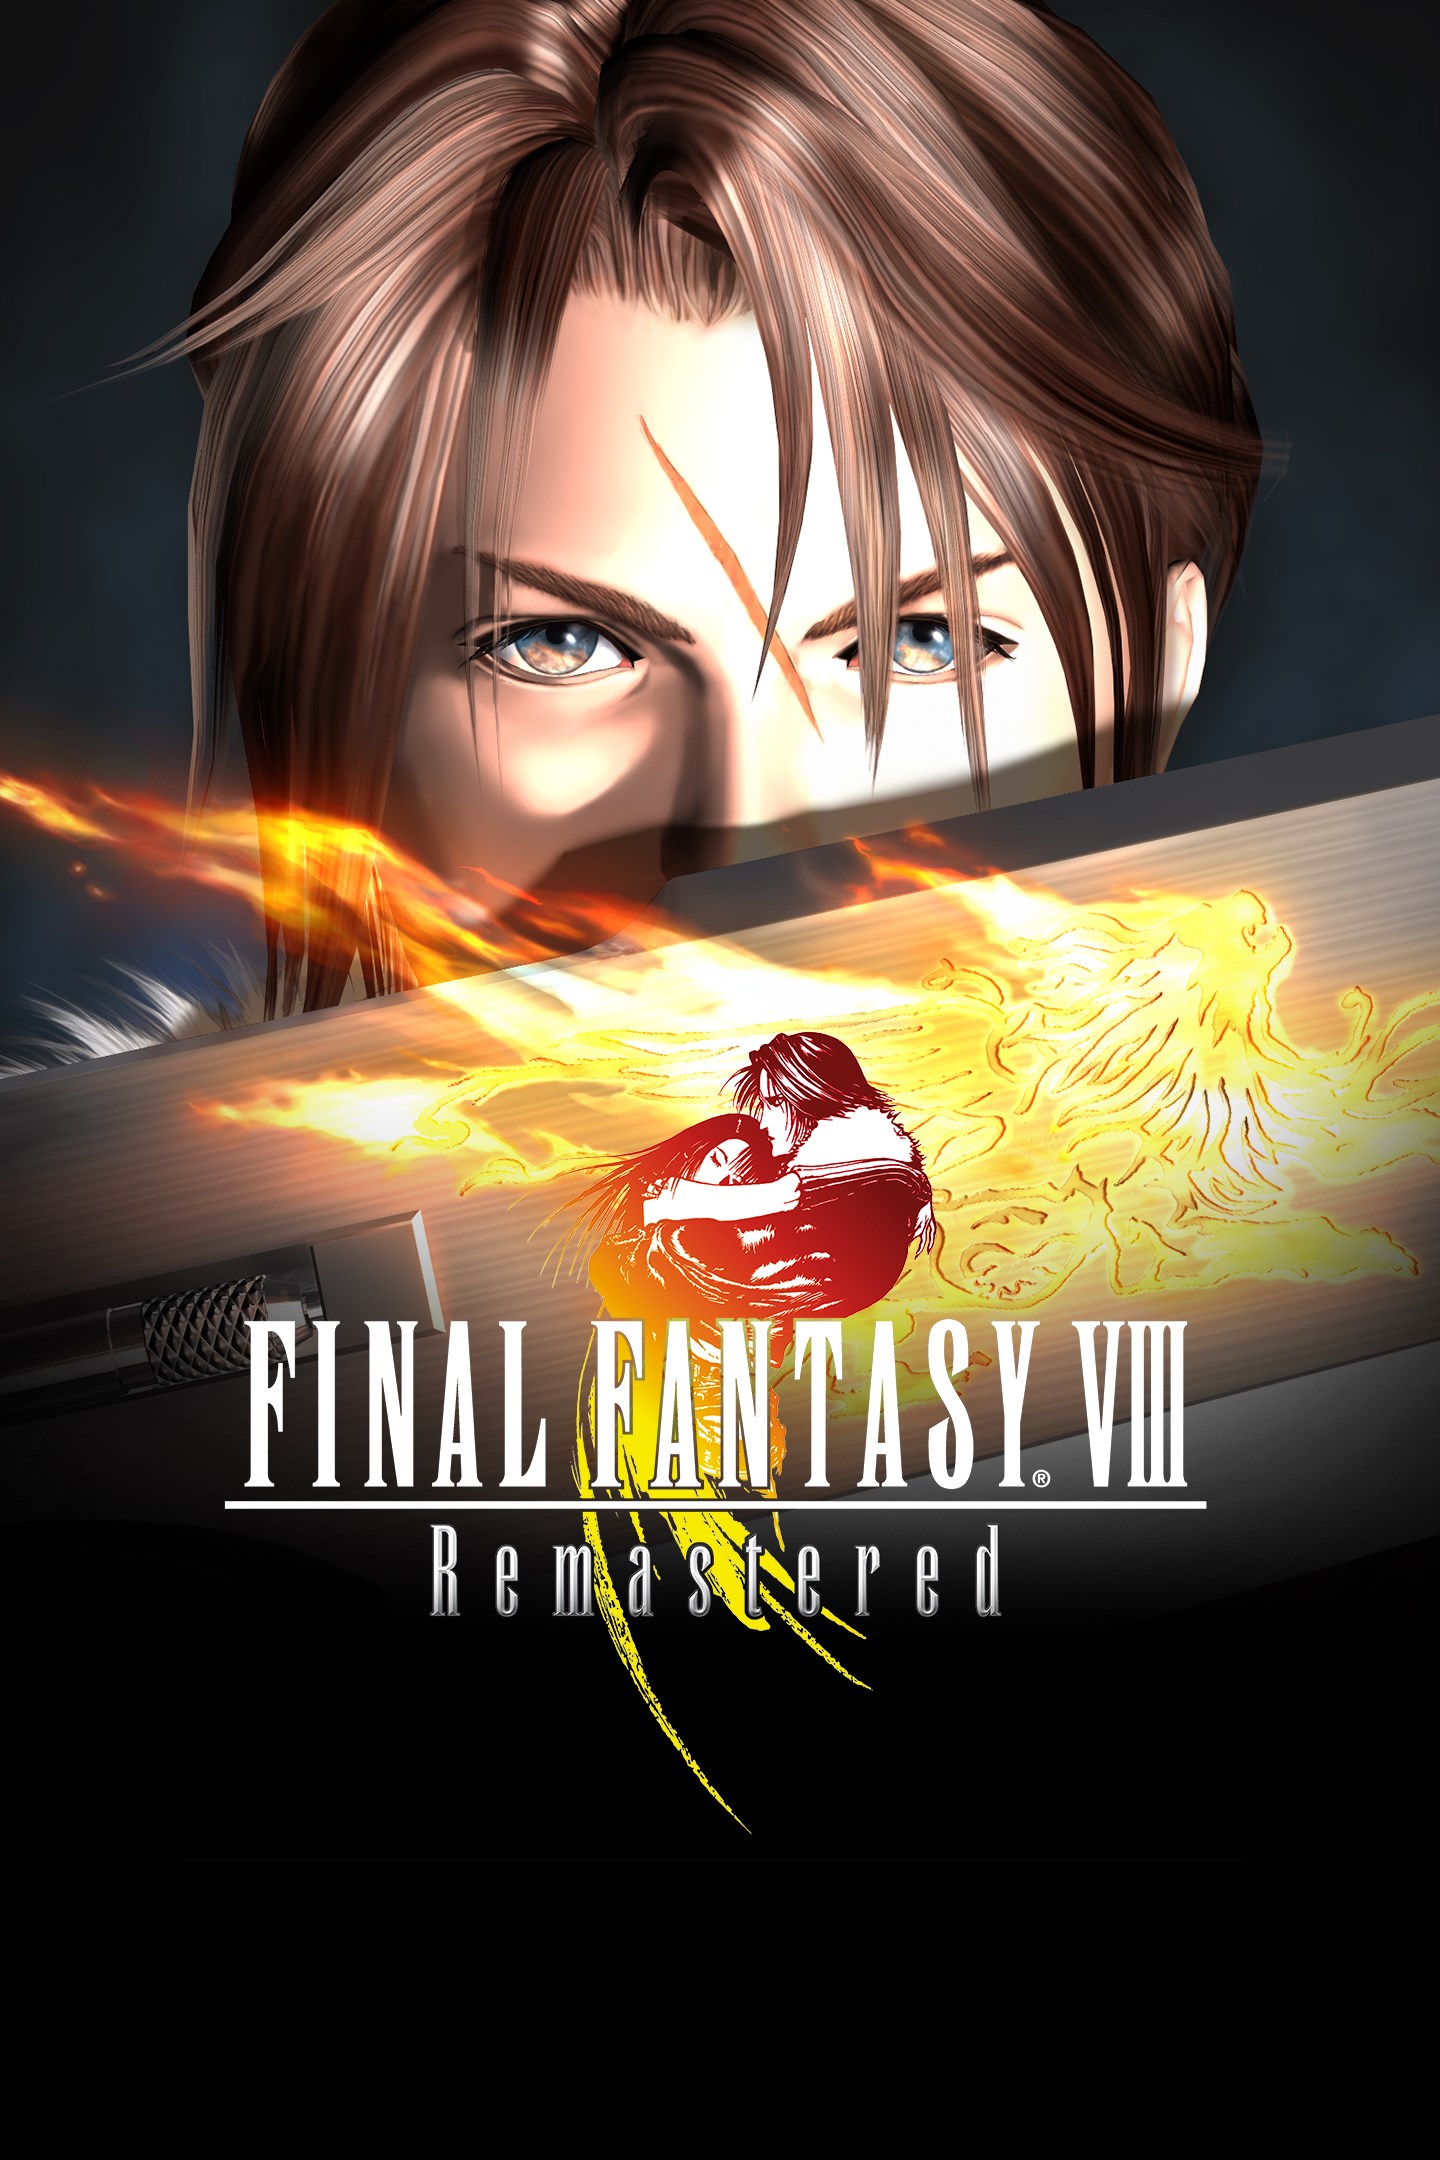 Buy Final Fantasy Viii Remastered Microsoft Store En Gb